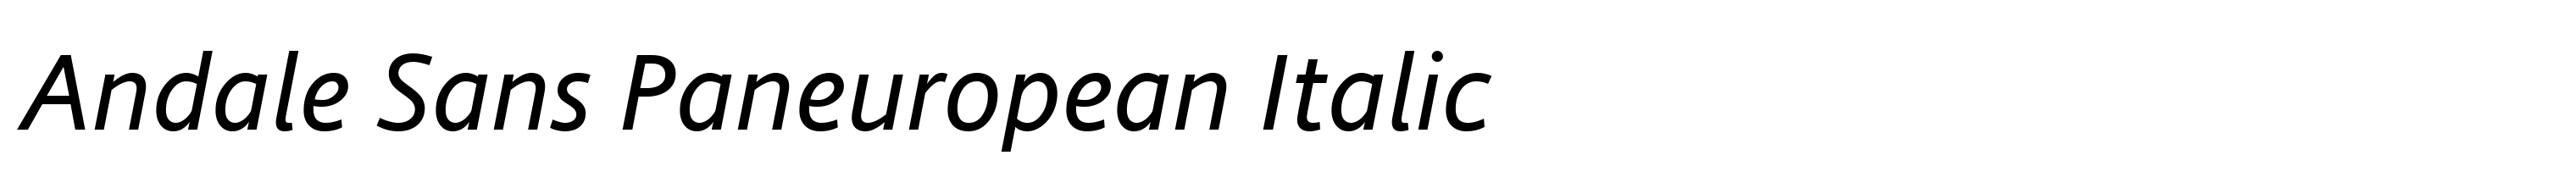 Andale Sans Paneuropean Italic